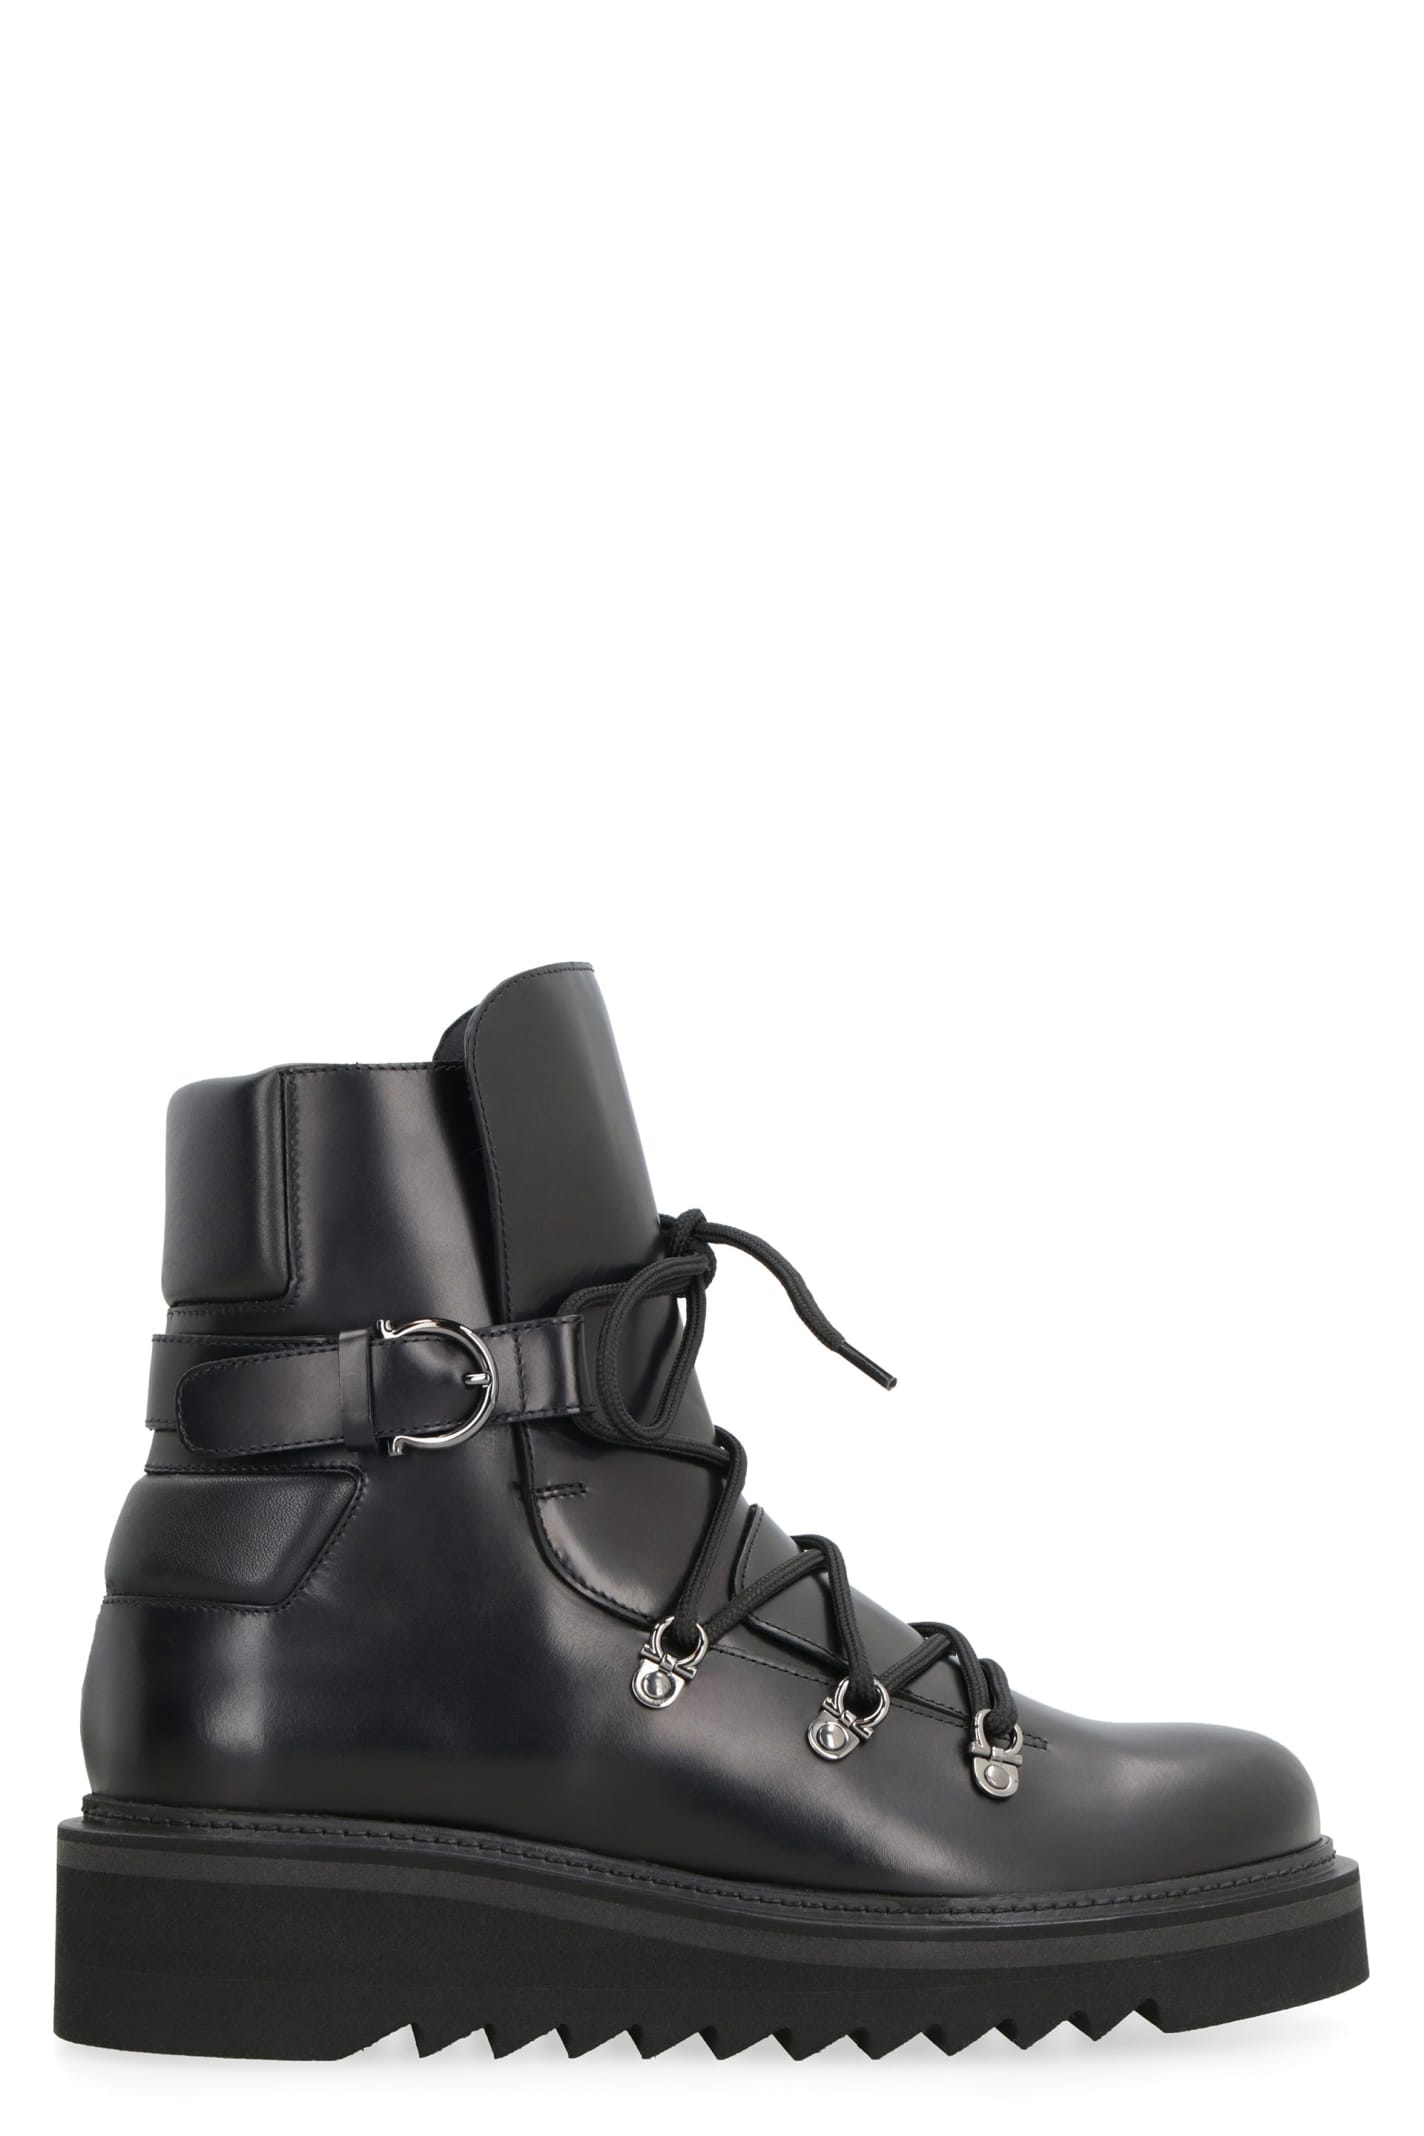 Salvatore Ferragamo Elimo Leather Ankle Boots